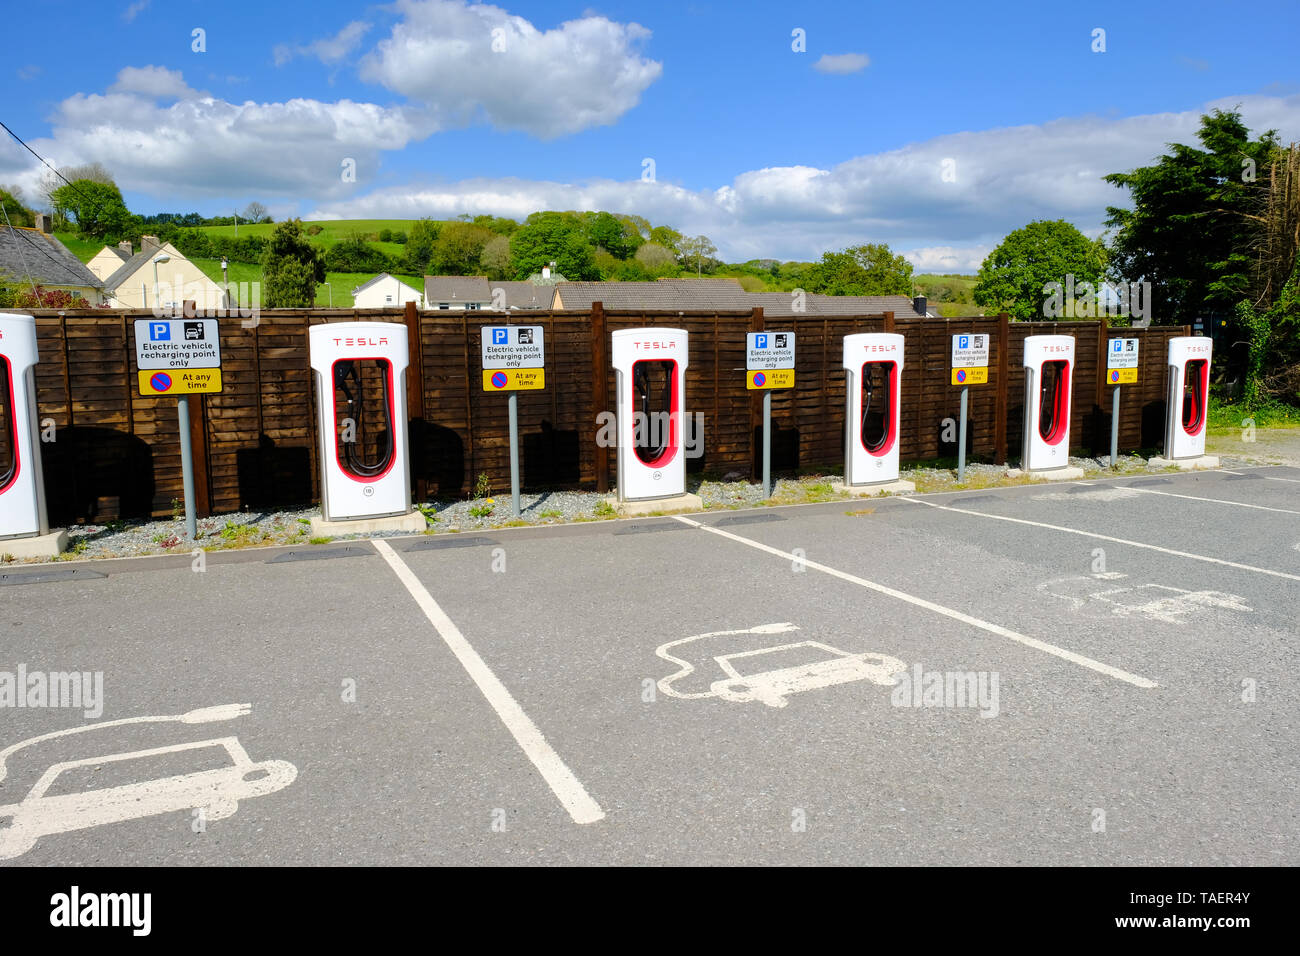 Tesla electric car charging point, UK - John Gollop Stock Photo